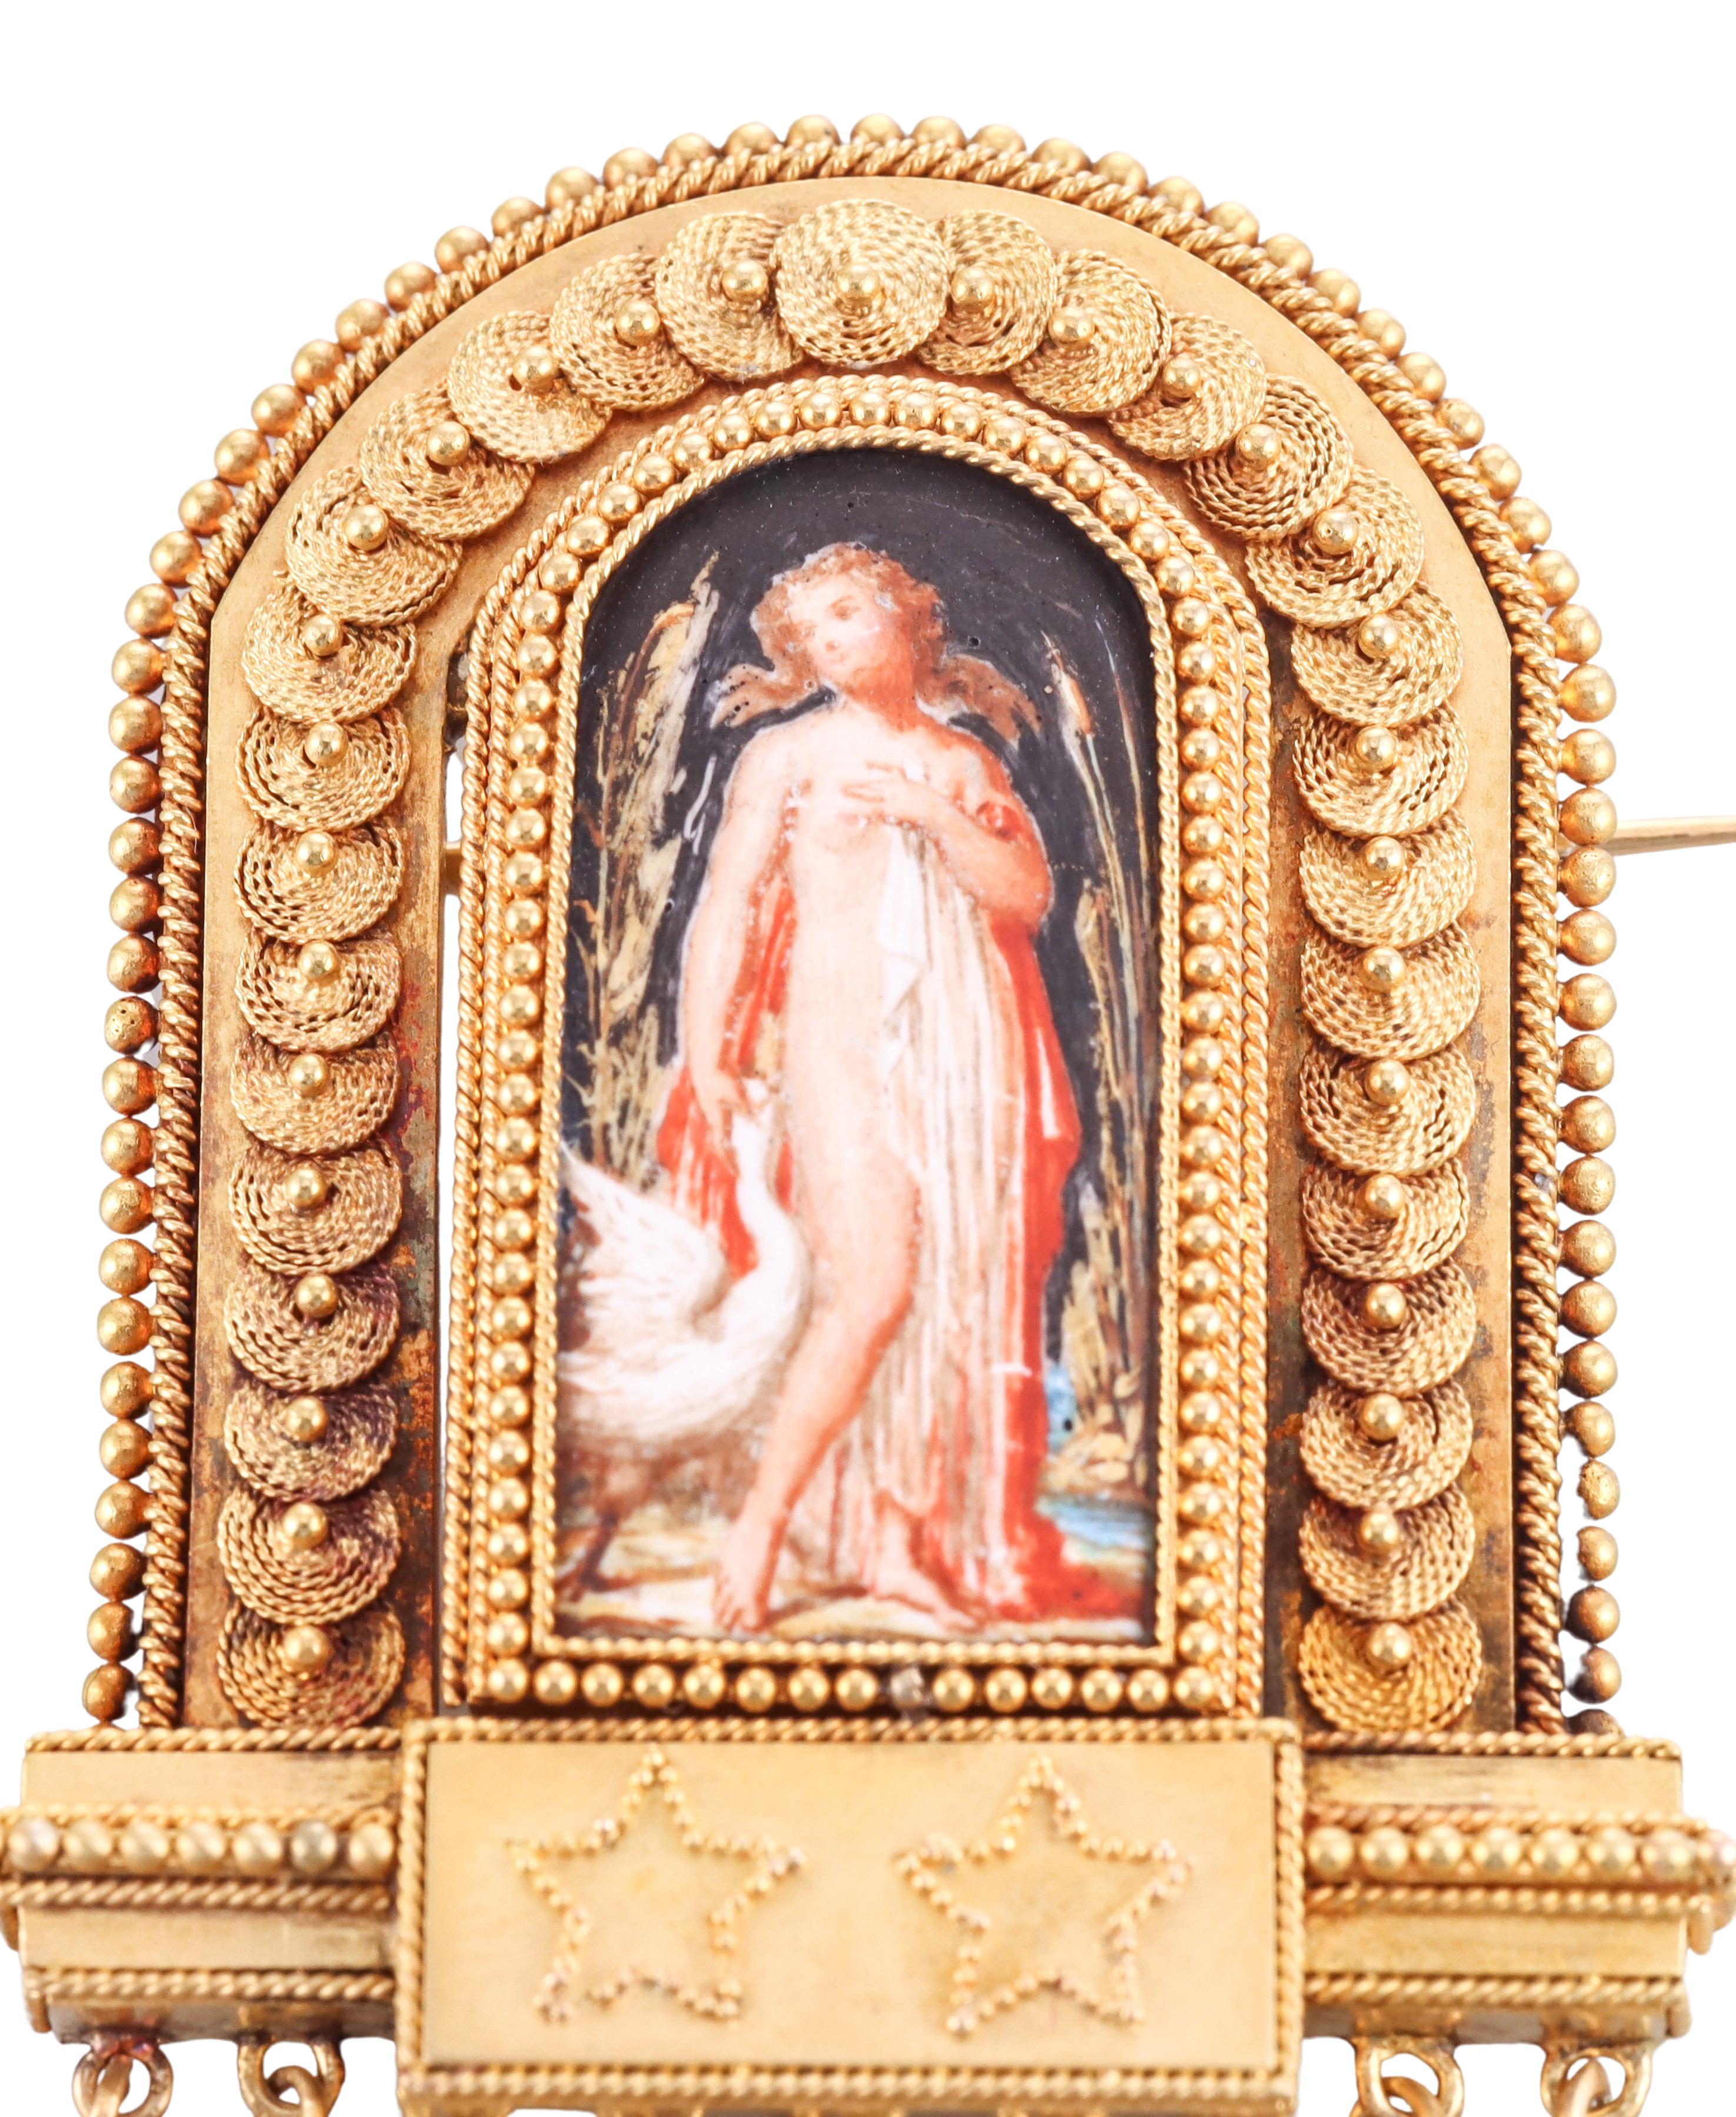 Broche Fontane originale en or 14k, circa 1900. La broche représente une peinture miniature d'une femme nue. La broche mesure 2 7/8